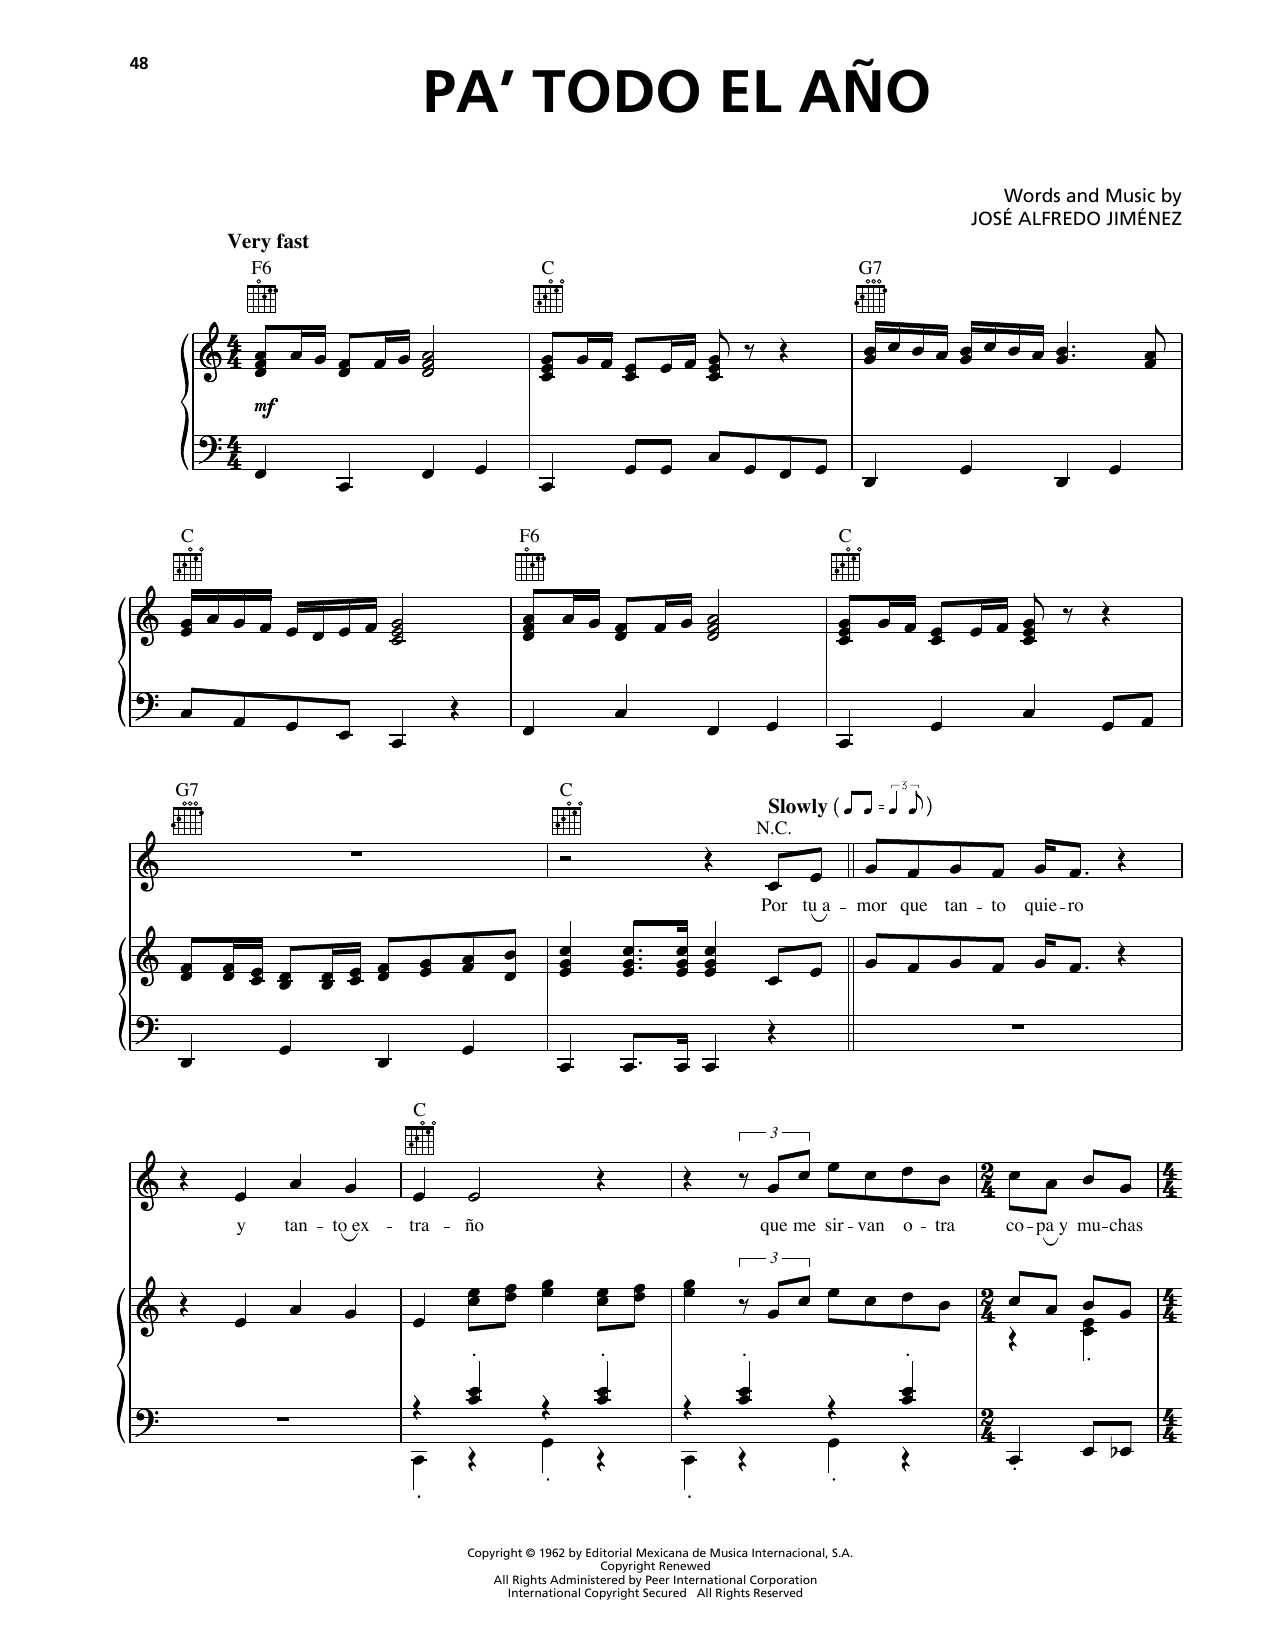 José Alfredo Jiménez Pa' Todo El Ano Sheet Music Notes & Chords for Piano, Vocal & Guitar (Right-Hand Melody) - Download or Print PDF